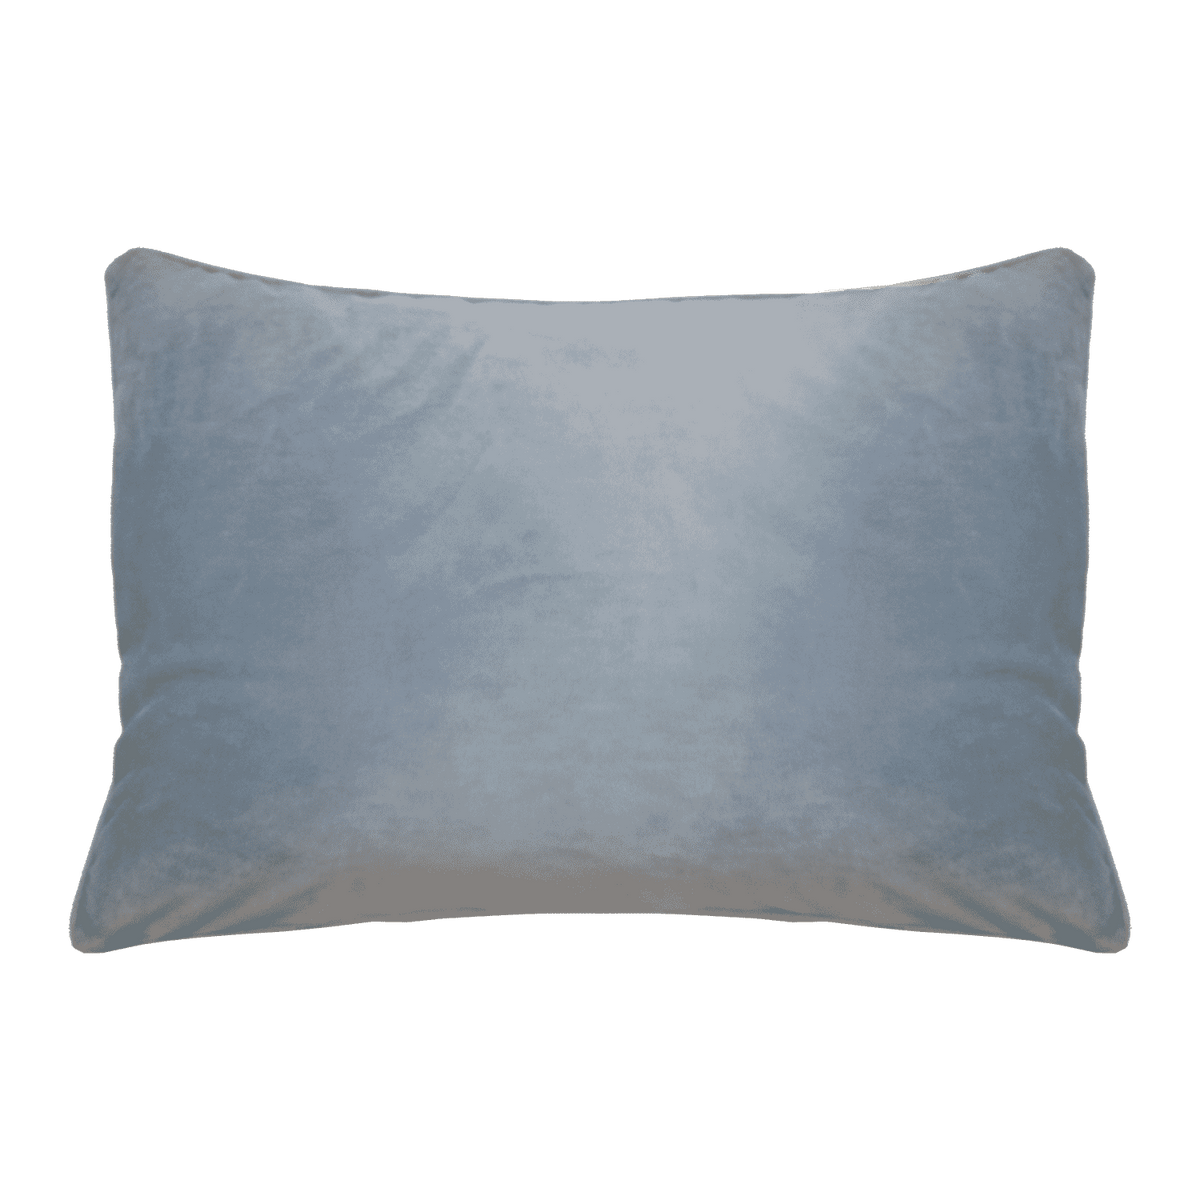 Cushion Cavallo 40 x 60 cm light blue (HCJ)